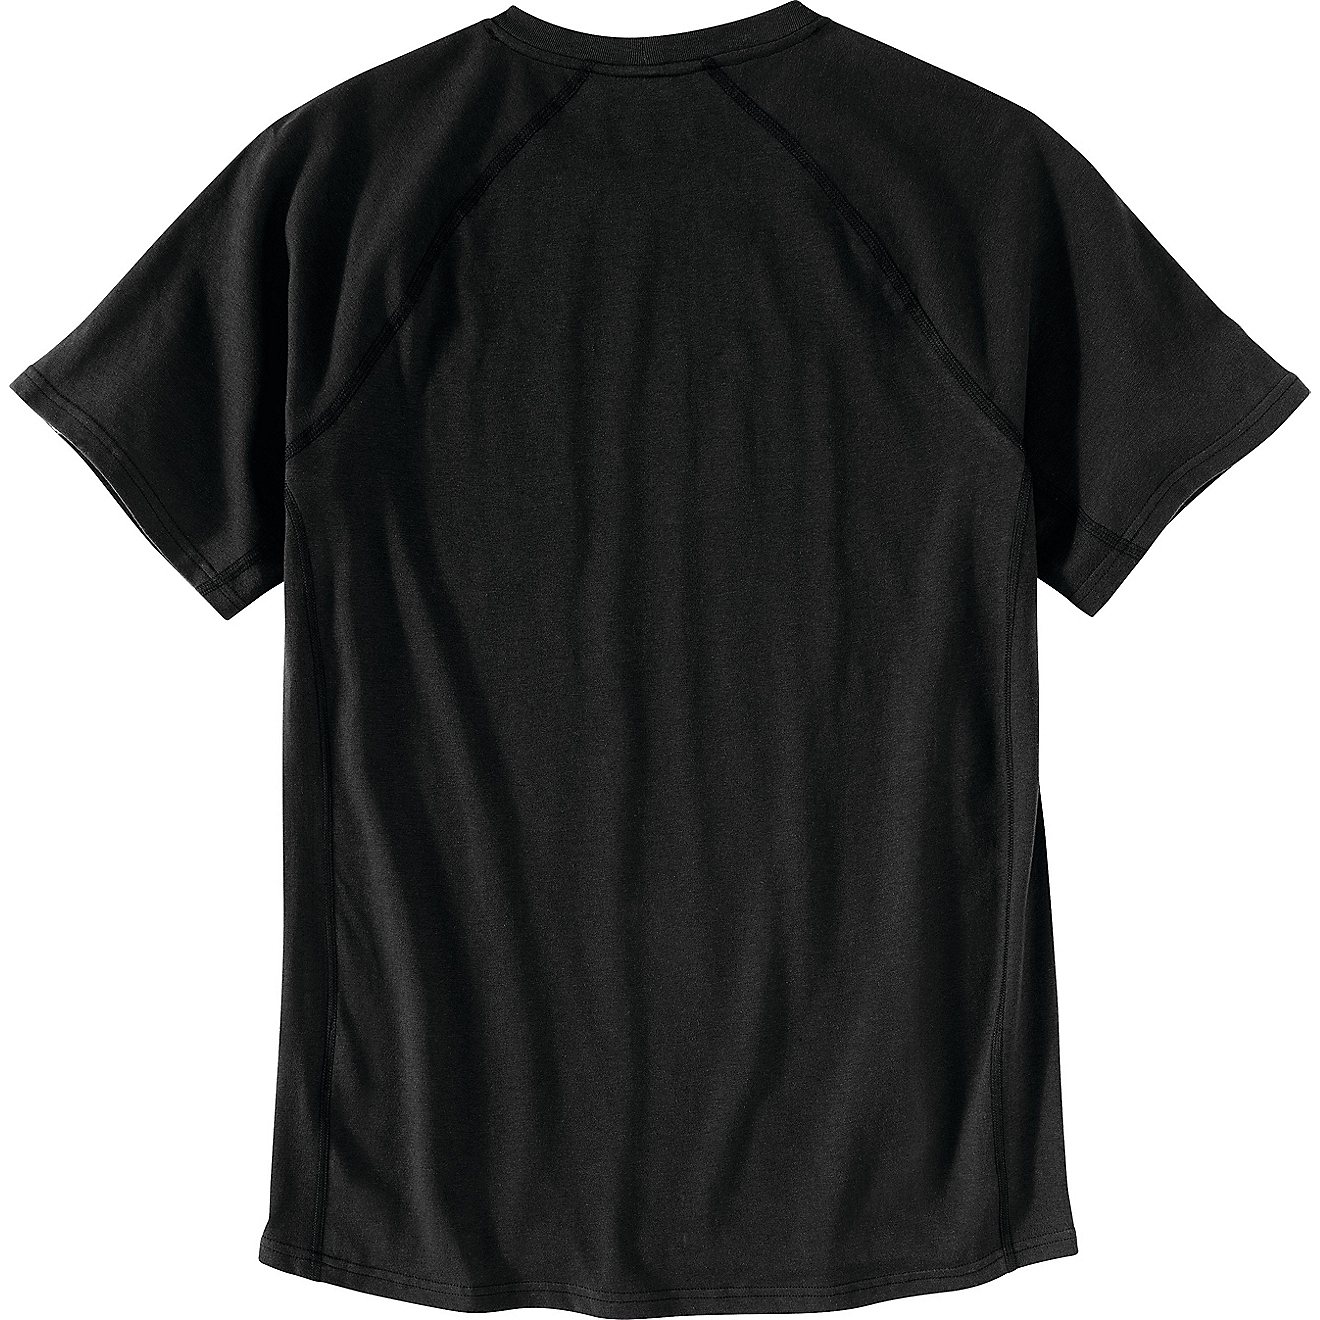 Carhartt Men's Force Relaxed Short Sleeve T-shirt                                                                                - view number 2